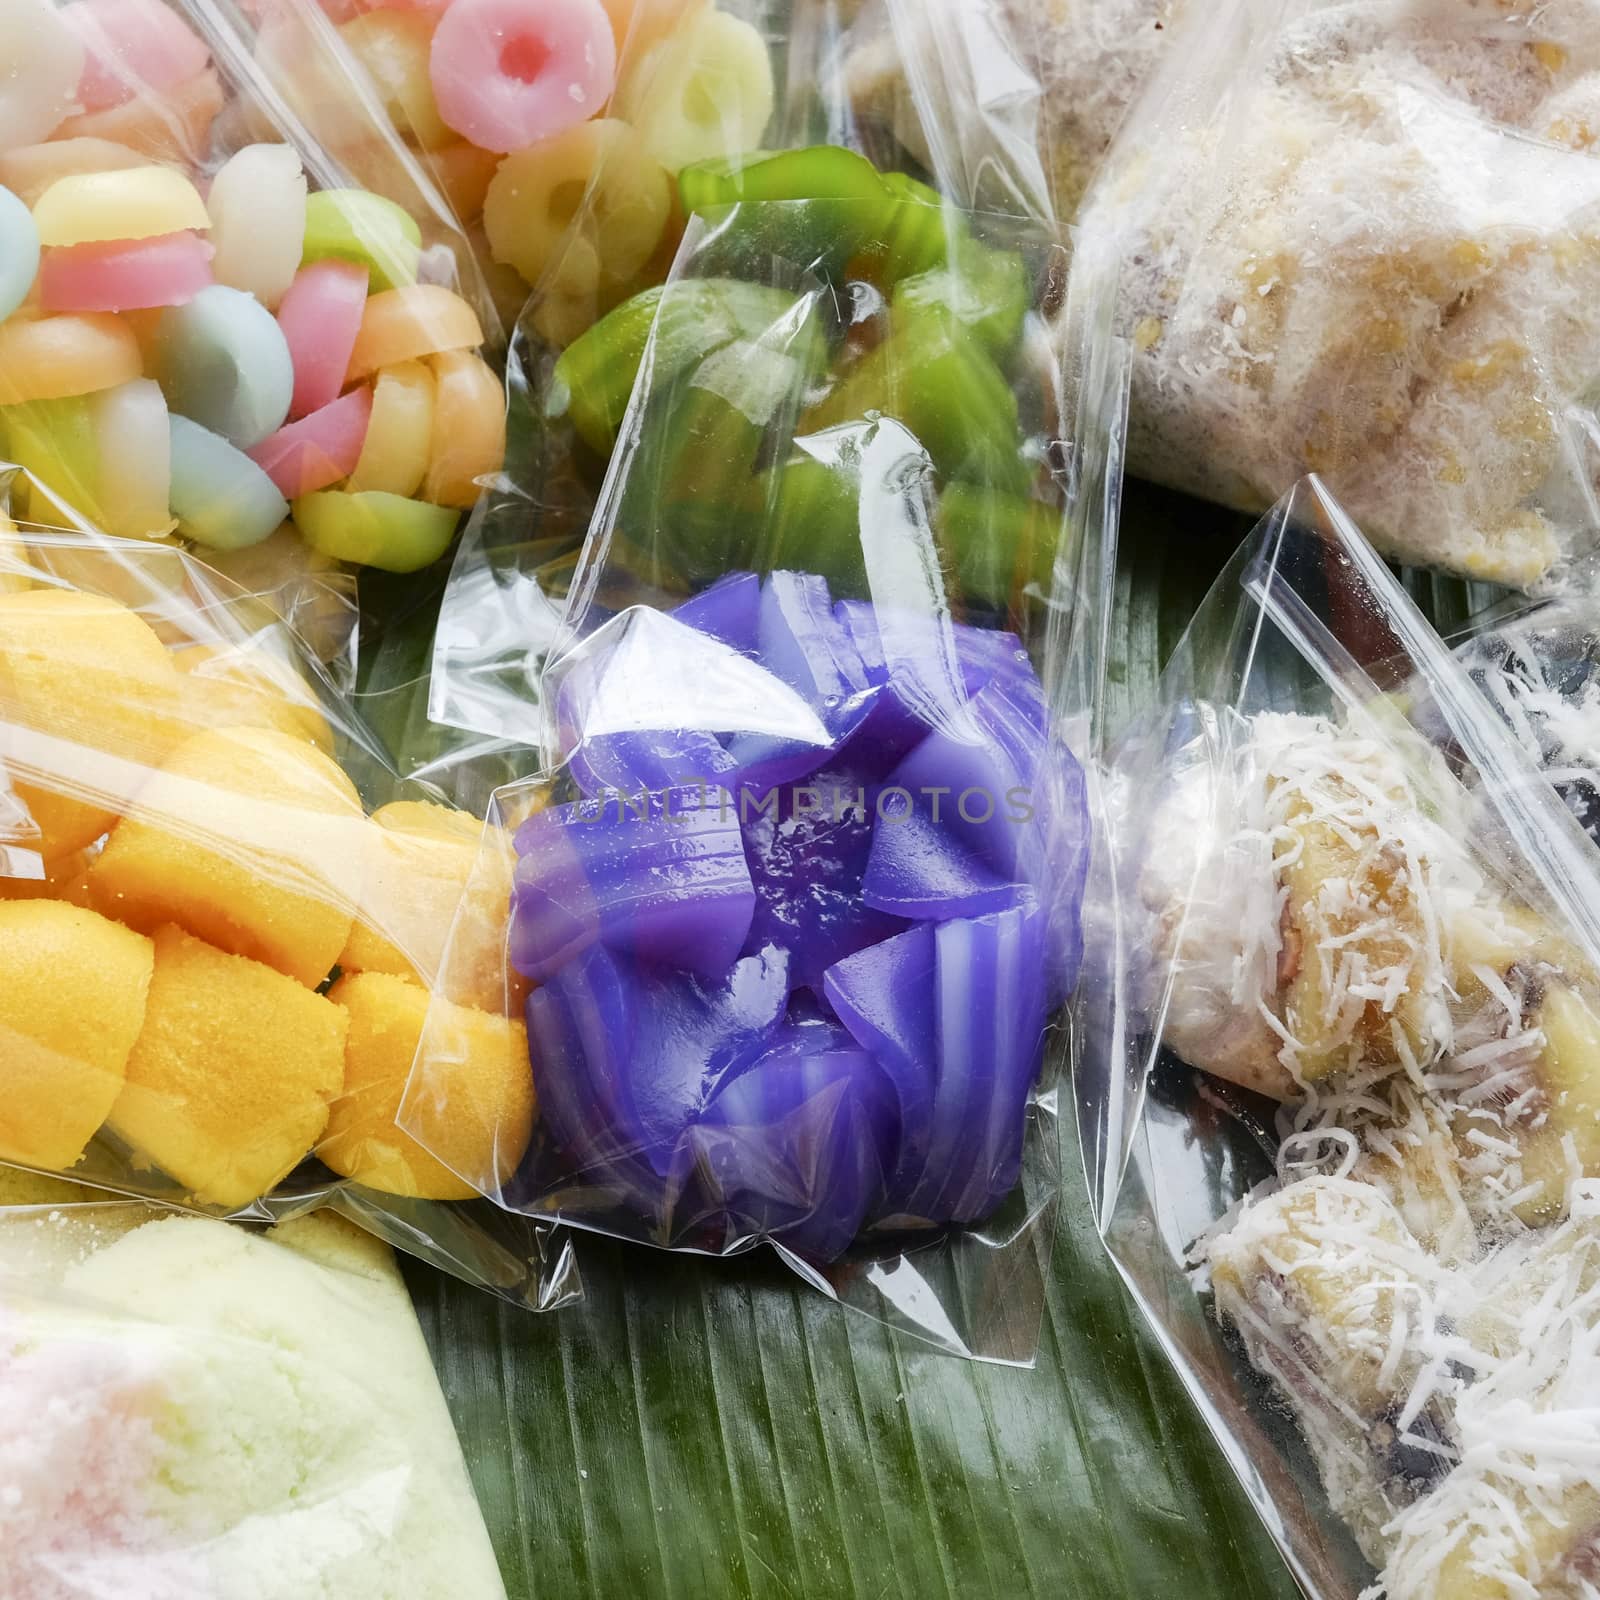 Thai dessert - many kind of Thai dessert in plastic bag at market